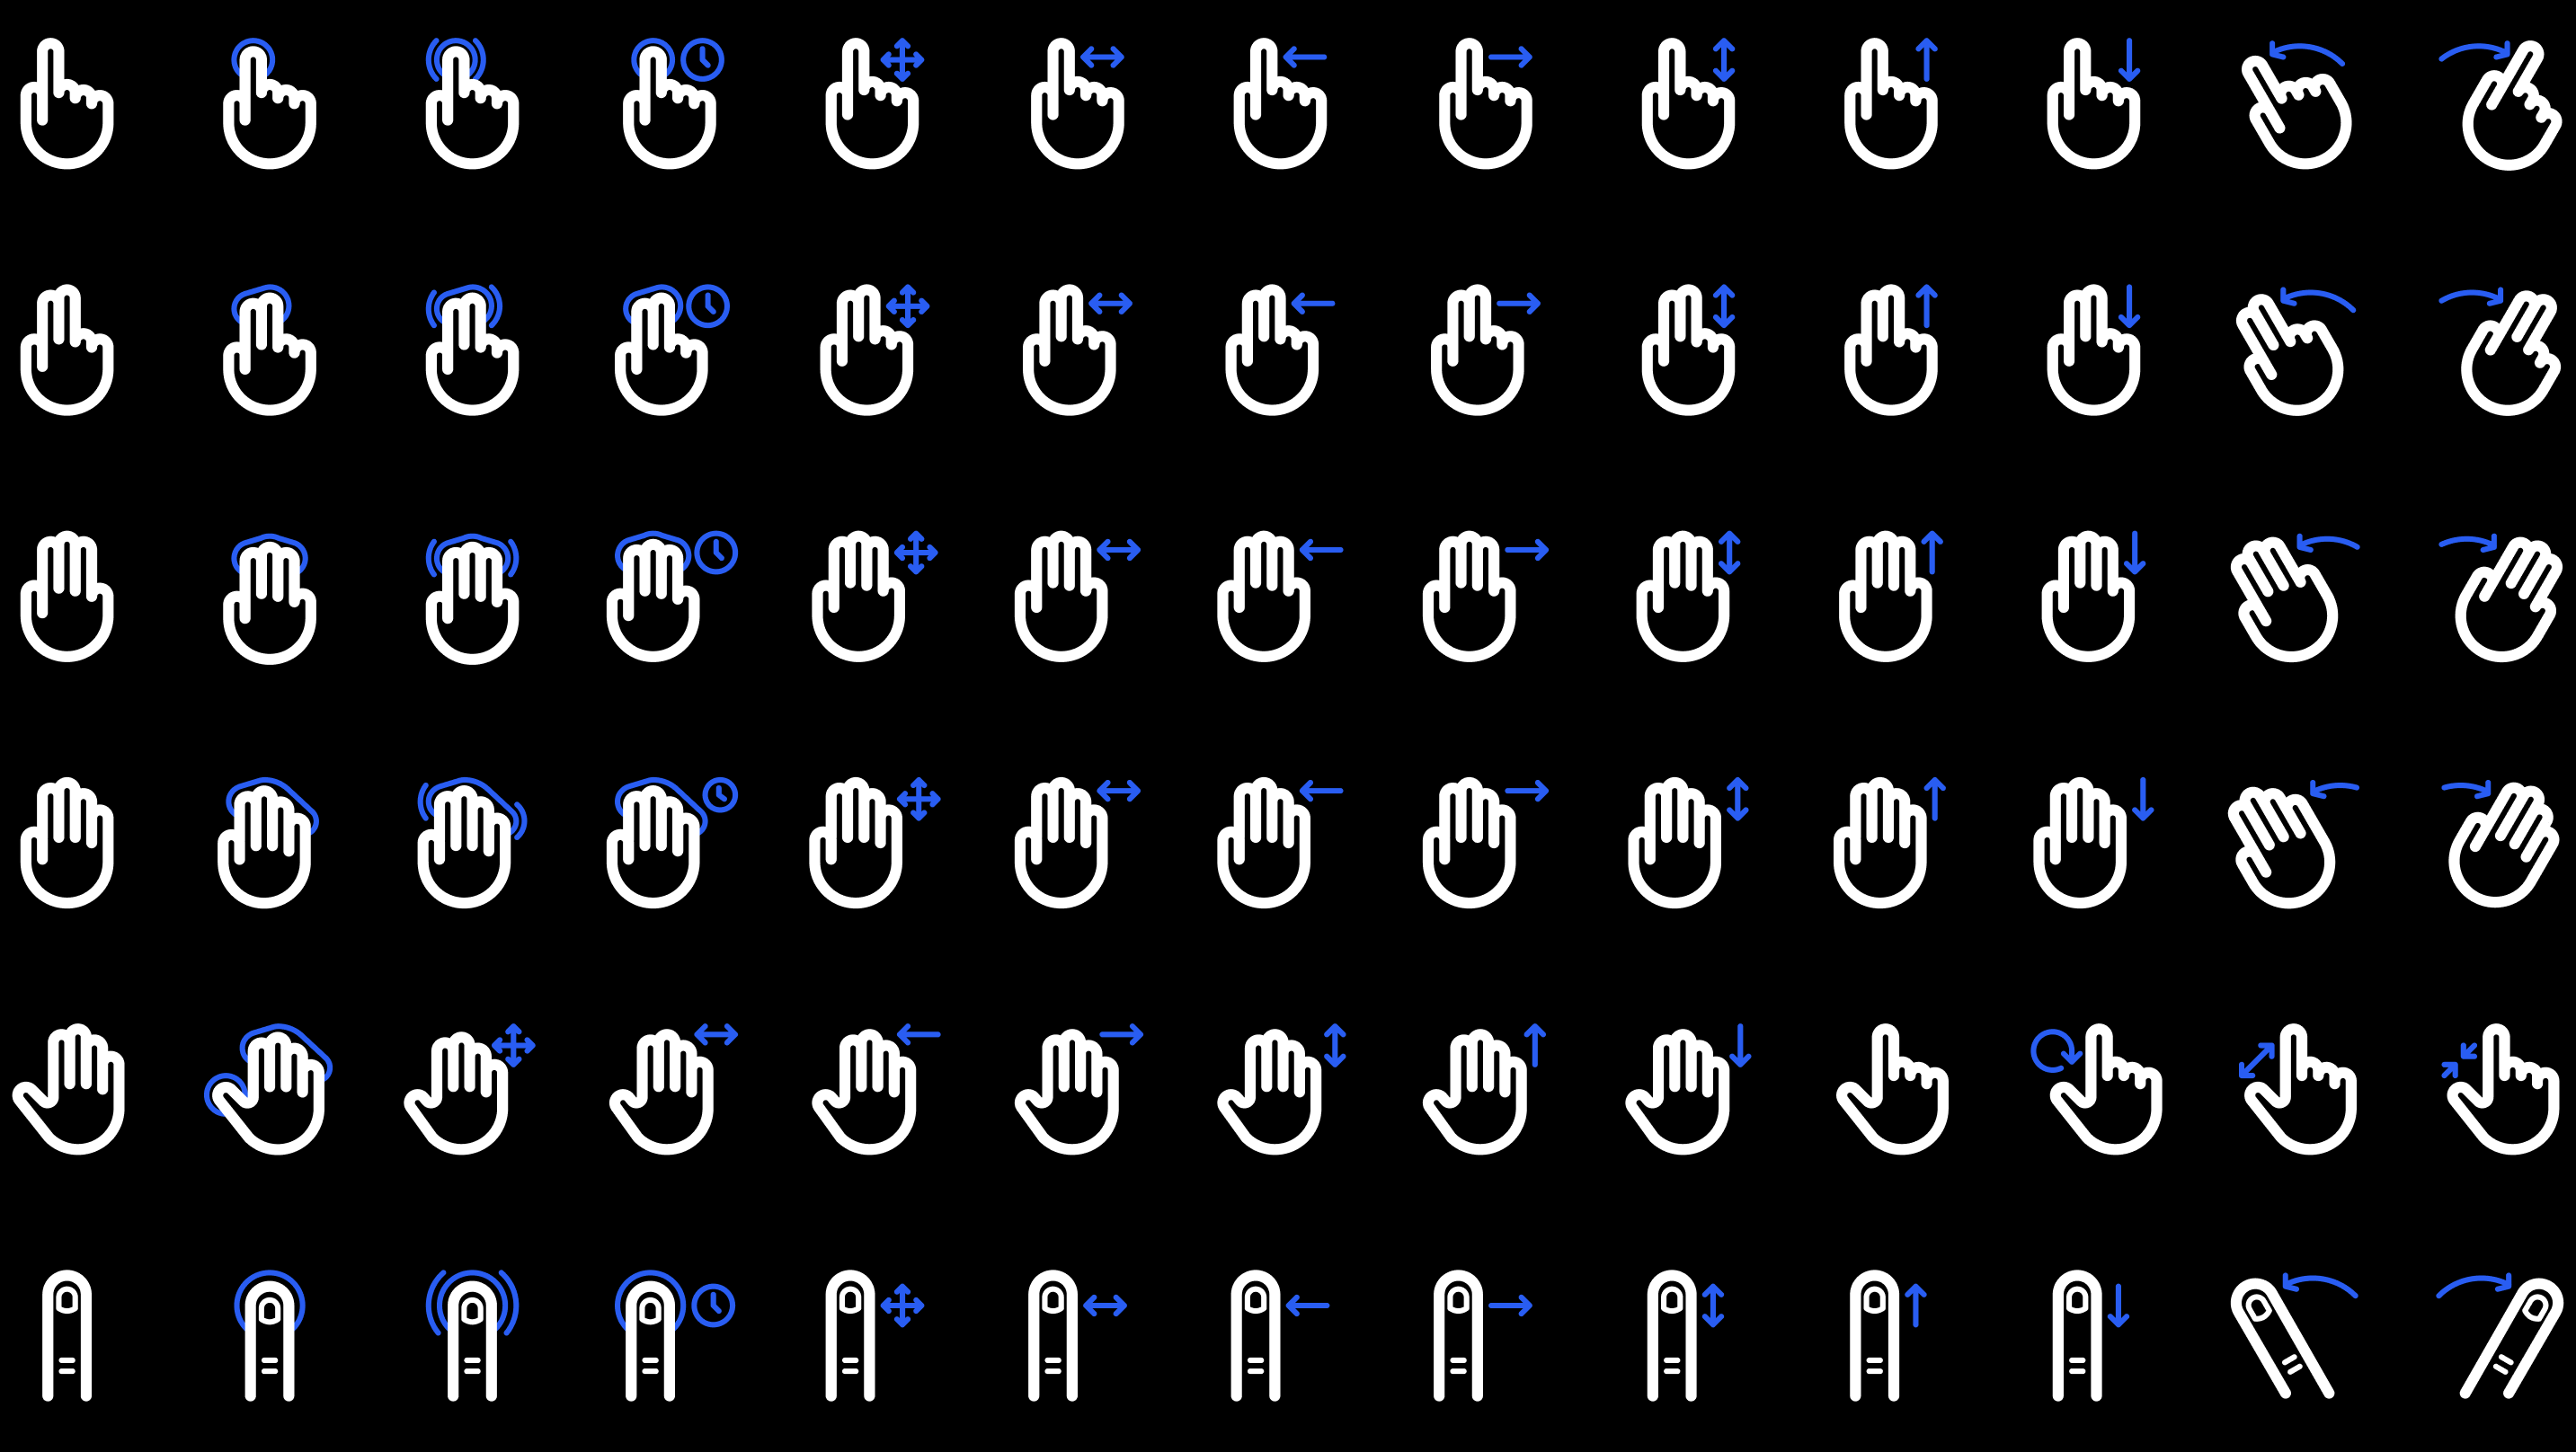 48px gesture icon set